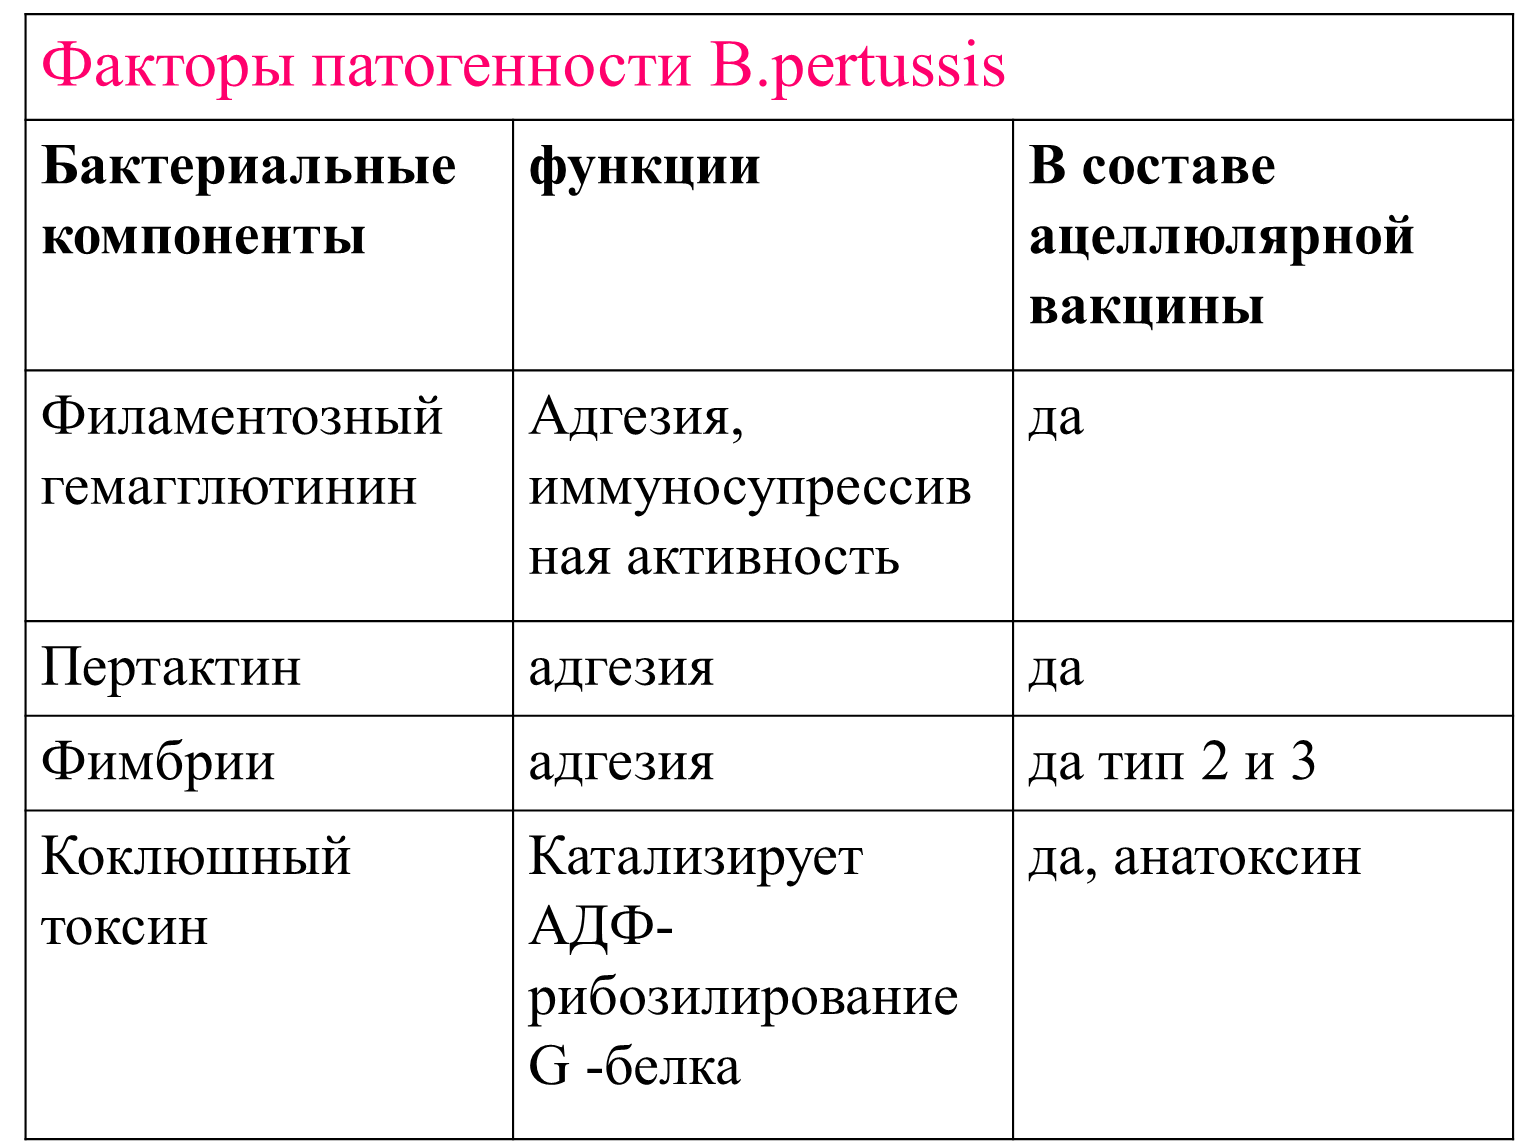 Факторы патогенности коклюша. Факторы патогенности бордетелл коклюша. Bordetella pertussis факторы патогенности. Факторы патогенности b.pertussis.